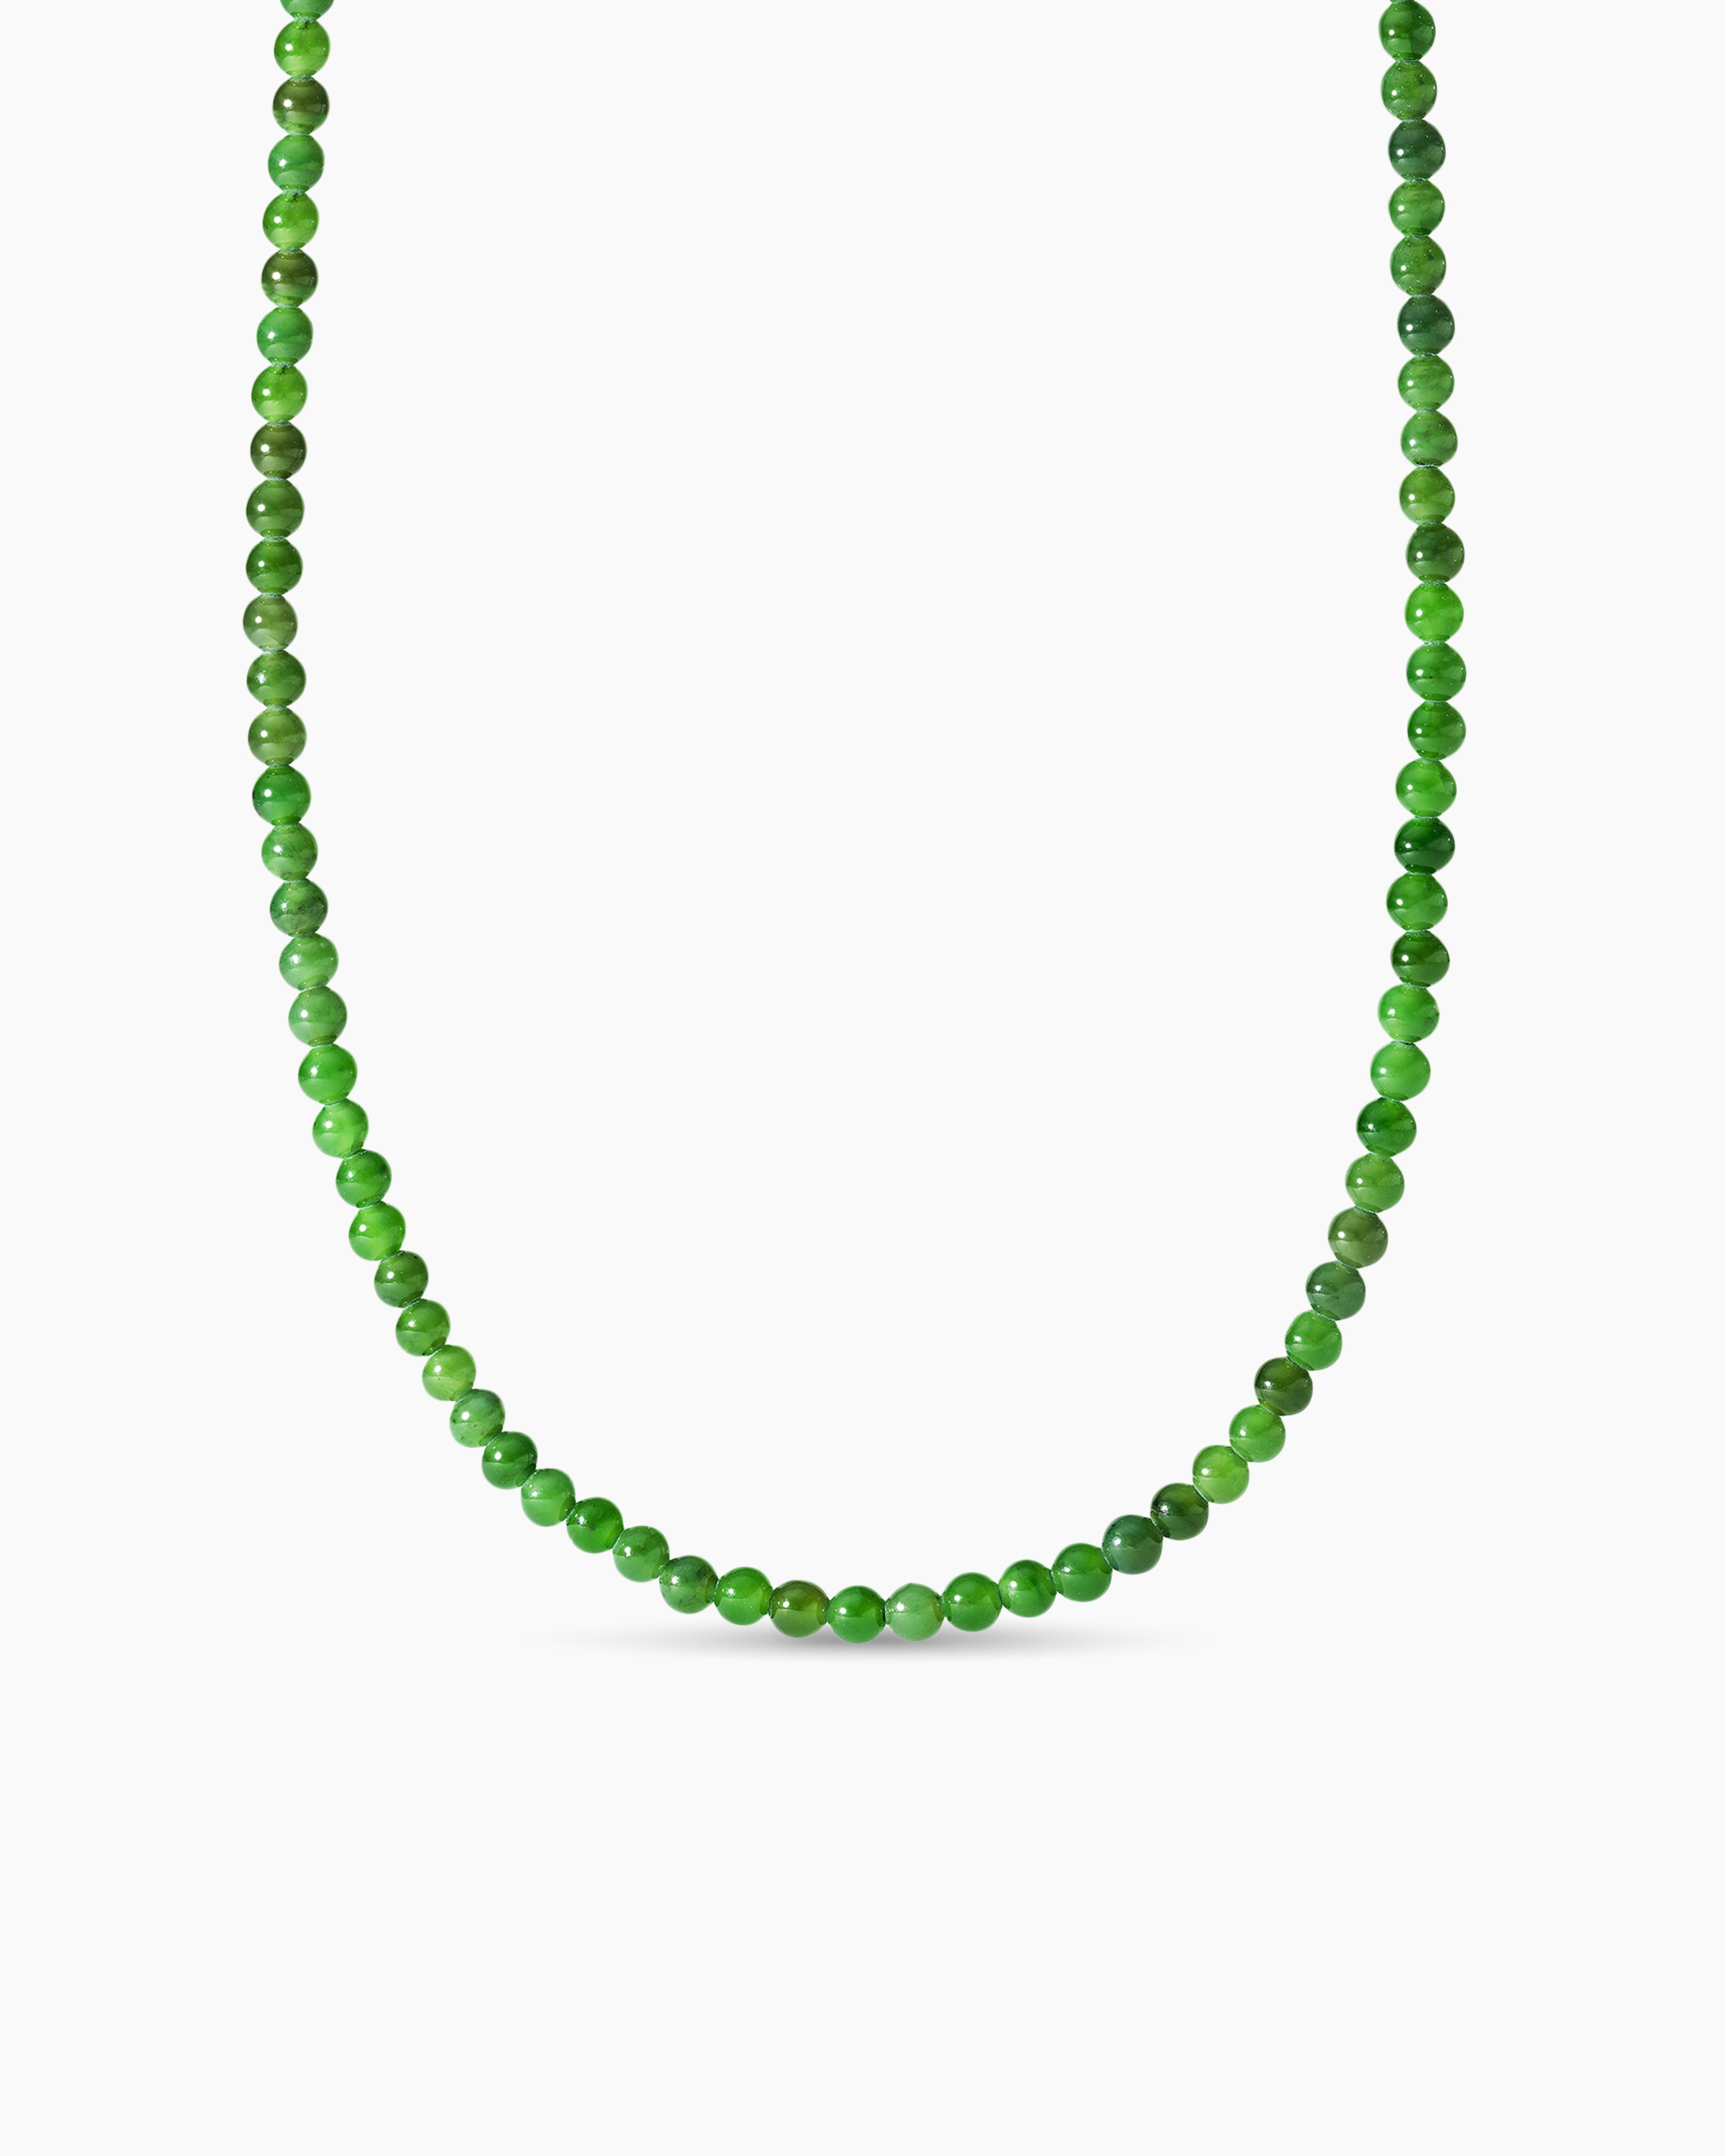 A beautiful vintage jadeite jade bead necklace 18 1/4